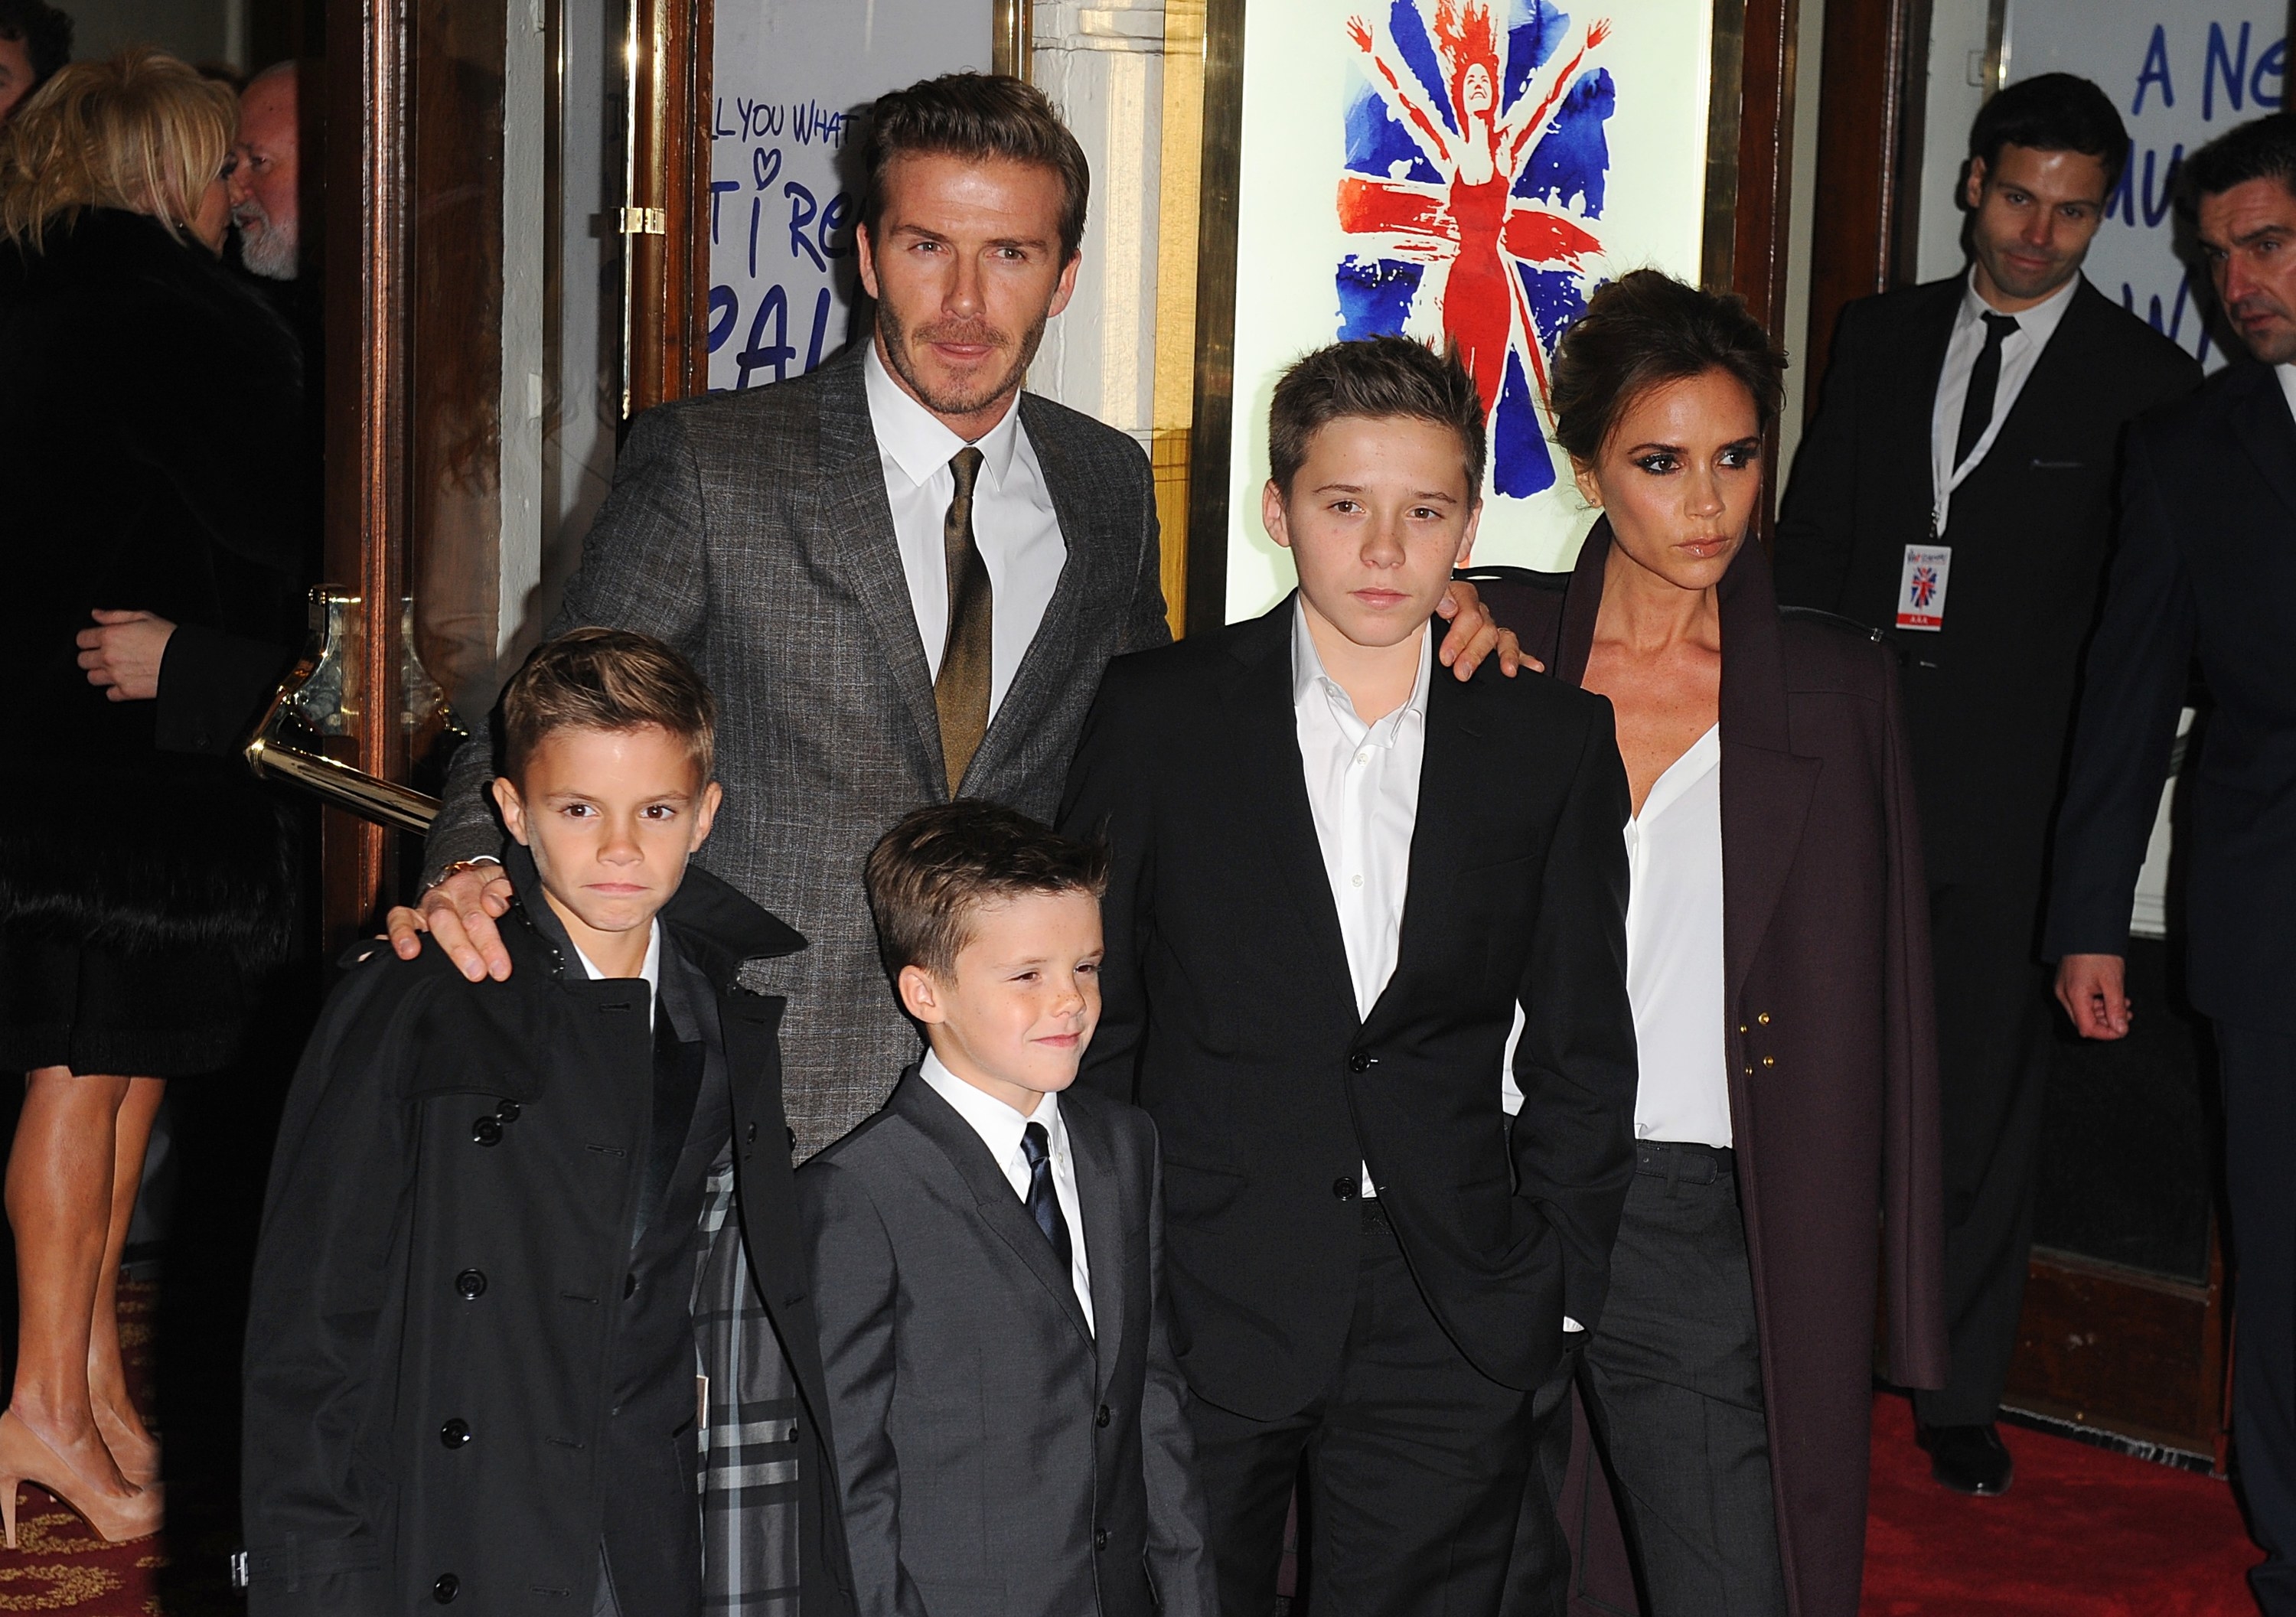 David and Victoria Beckham with their children Romeo, Cruz, and Brooklyn